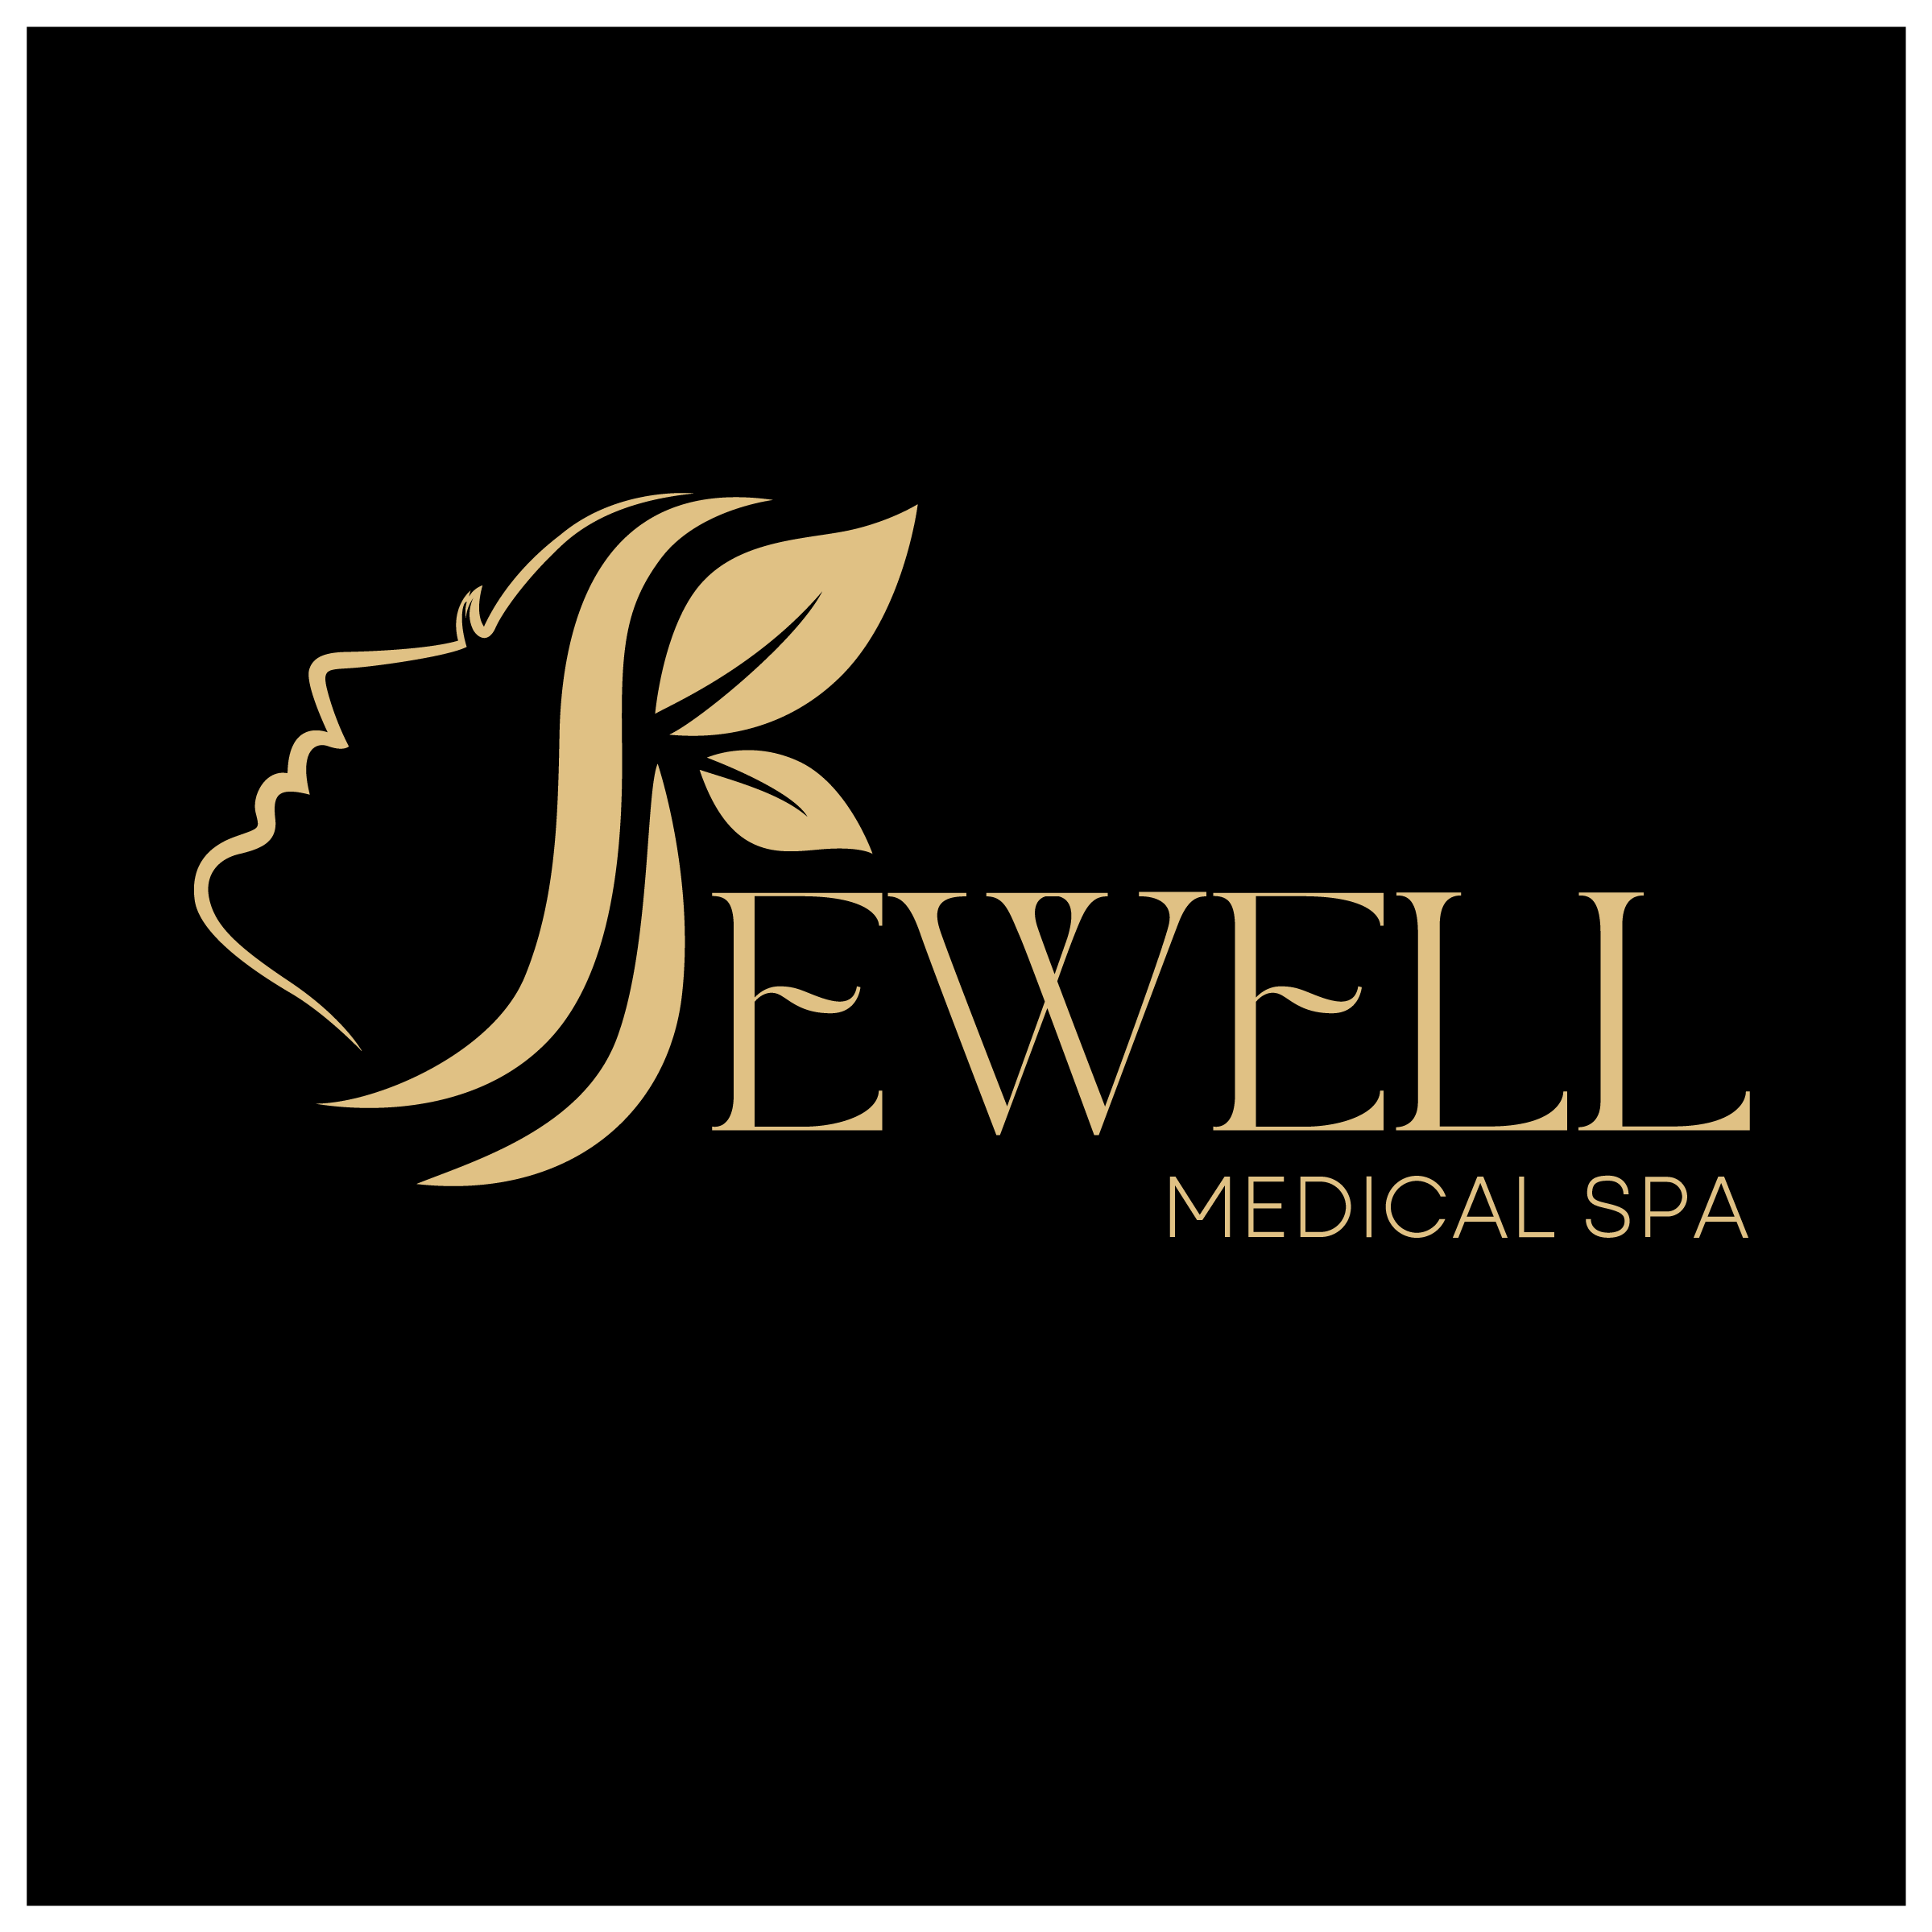 Jewell Medical Spa